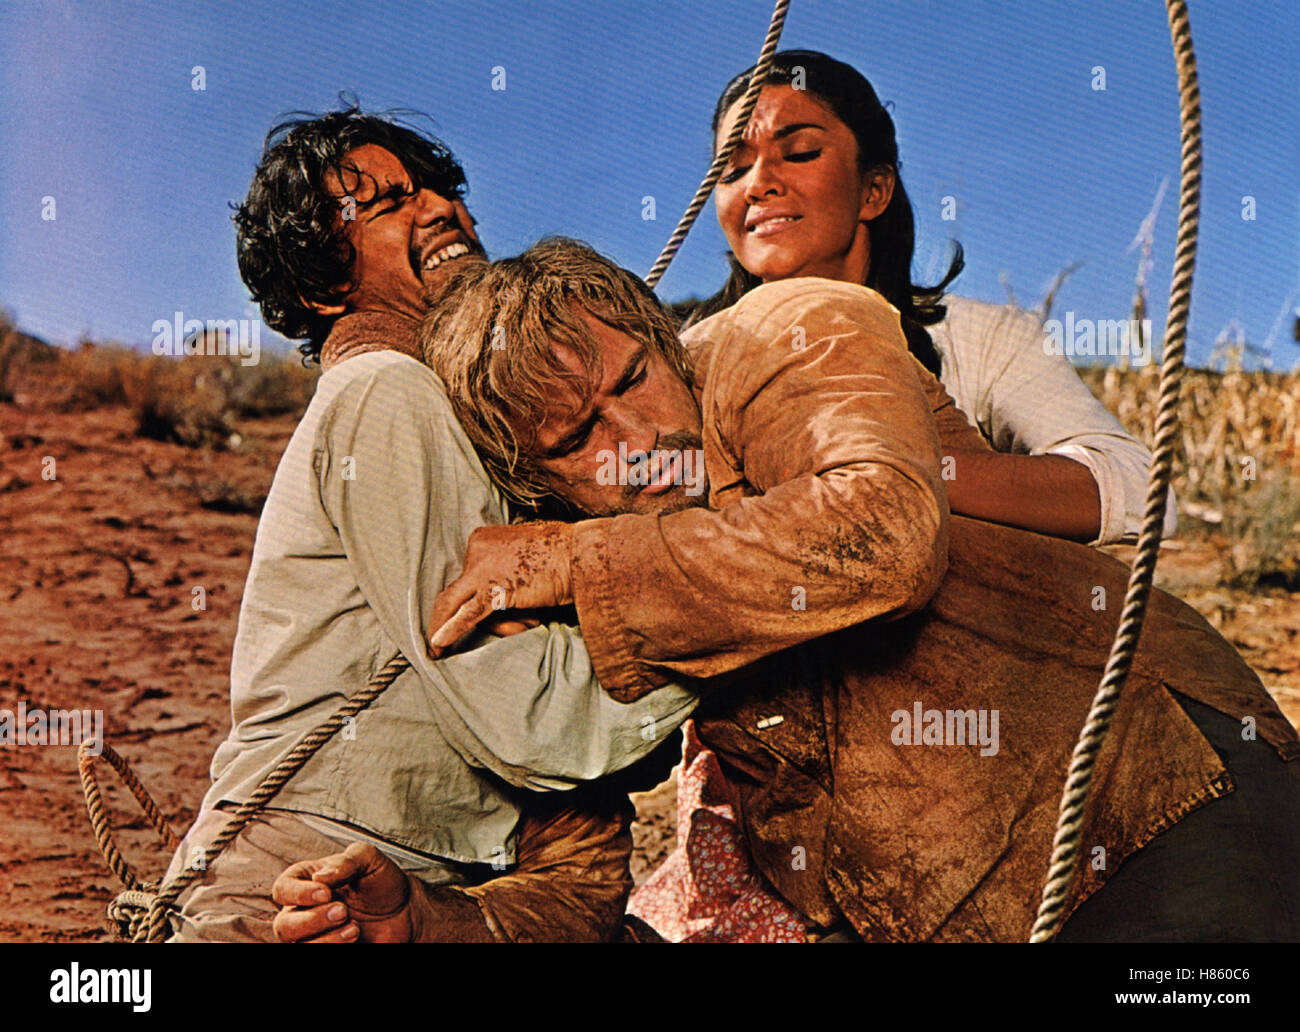 Südwest nach Sonora, (THE APPALOOSA) USA 1966, Regie: Sidney J. Furie, RAFAEL CAMPOS, MARLON BRANDO, ANJAMETTE COMER, Stichwort: Rettung, Folter, Opfer, Verletzter Stock Photo